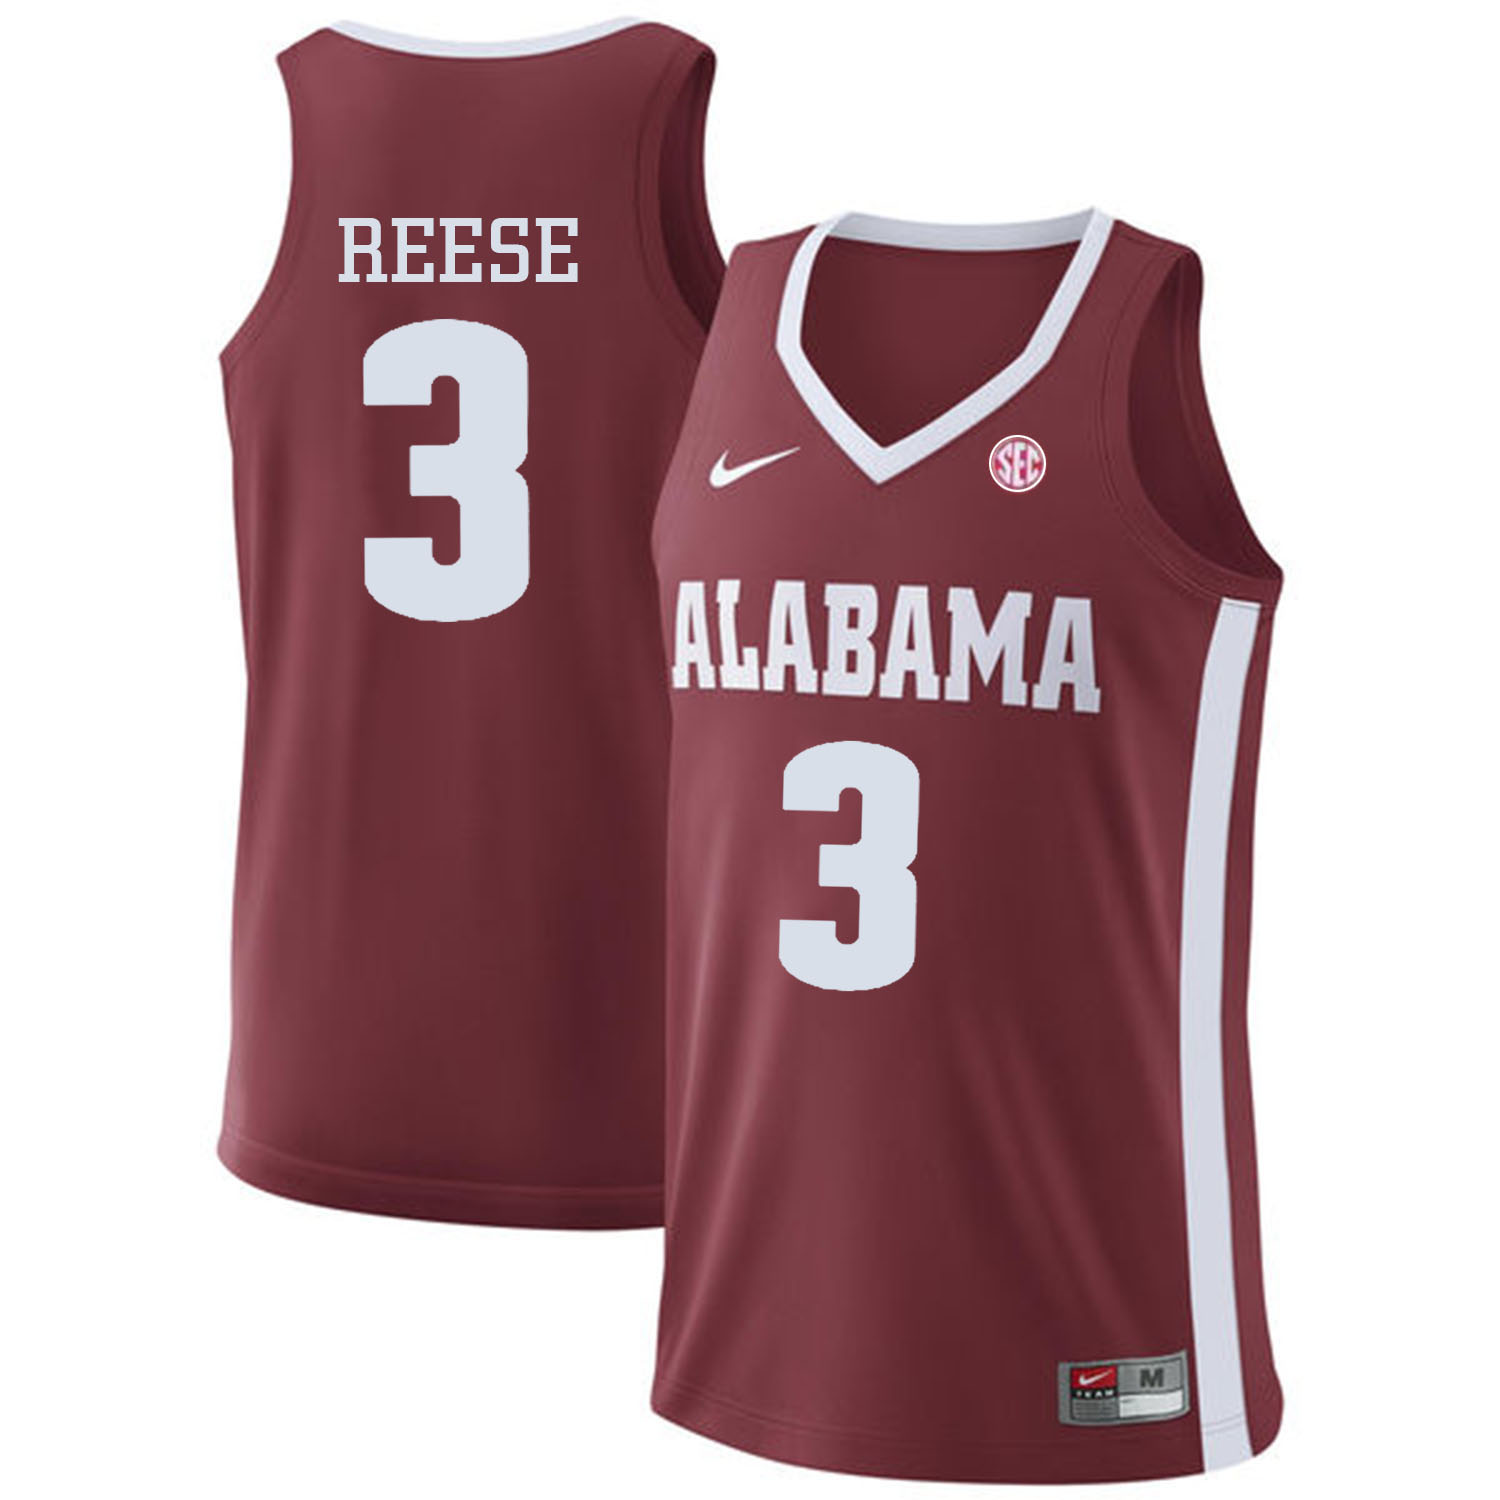 Alabama Crimson Tide 3 Alex Reese Red College Basketball Jersey